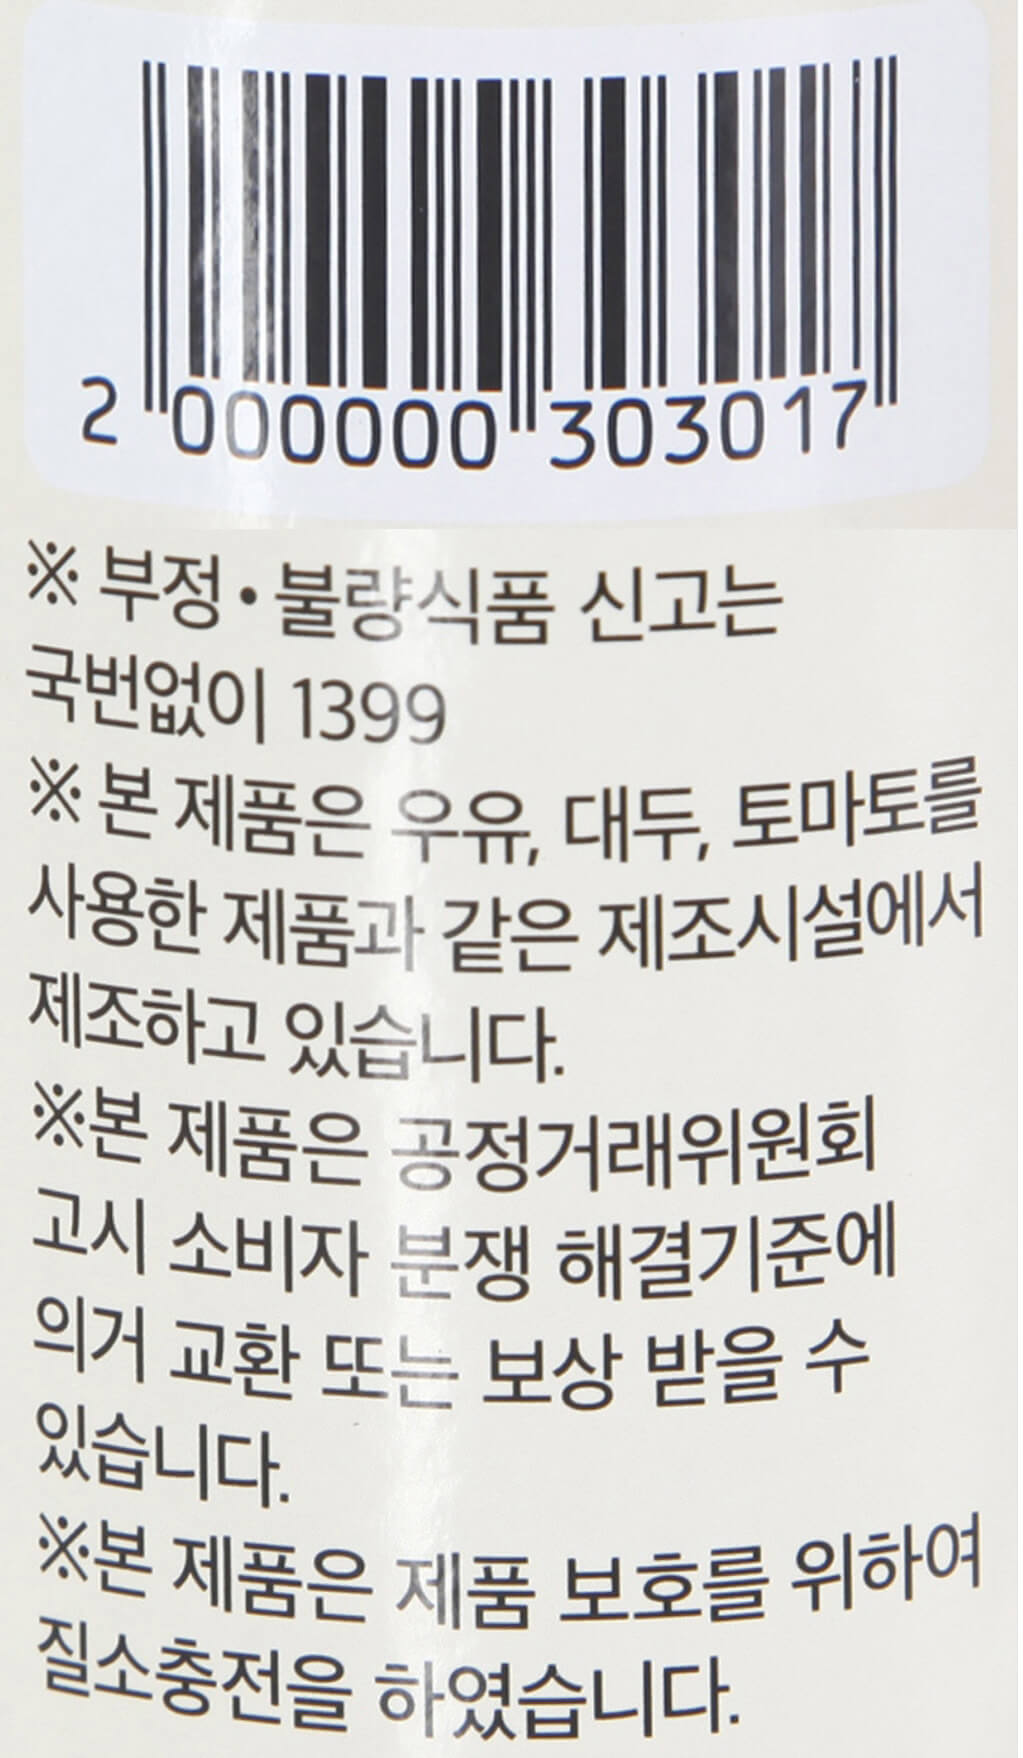 No Brand] Purple Sweet Potato Chip 160g - New World E SHOP_Korean Food